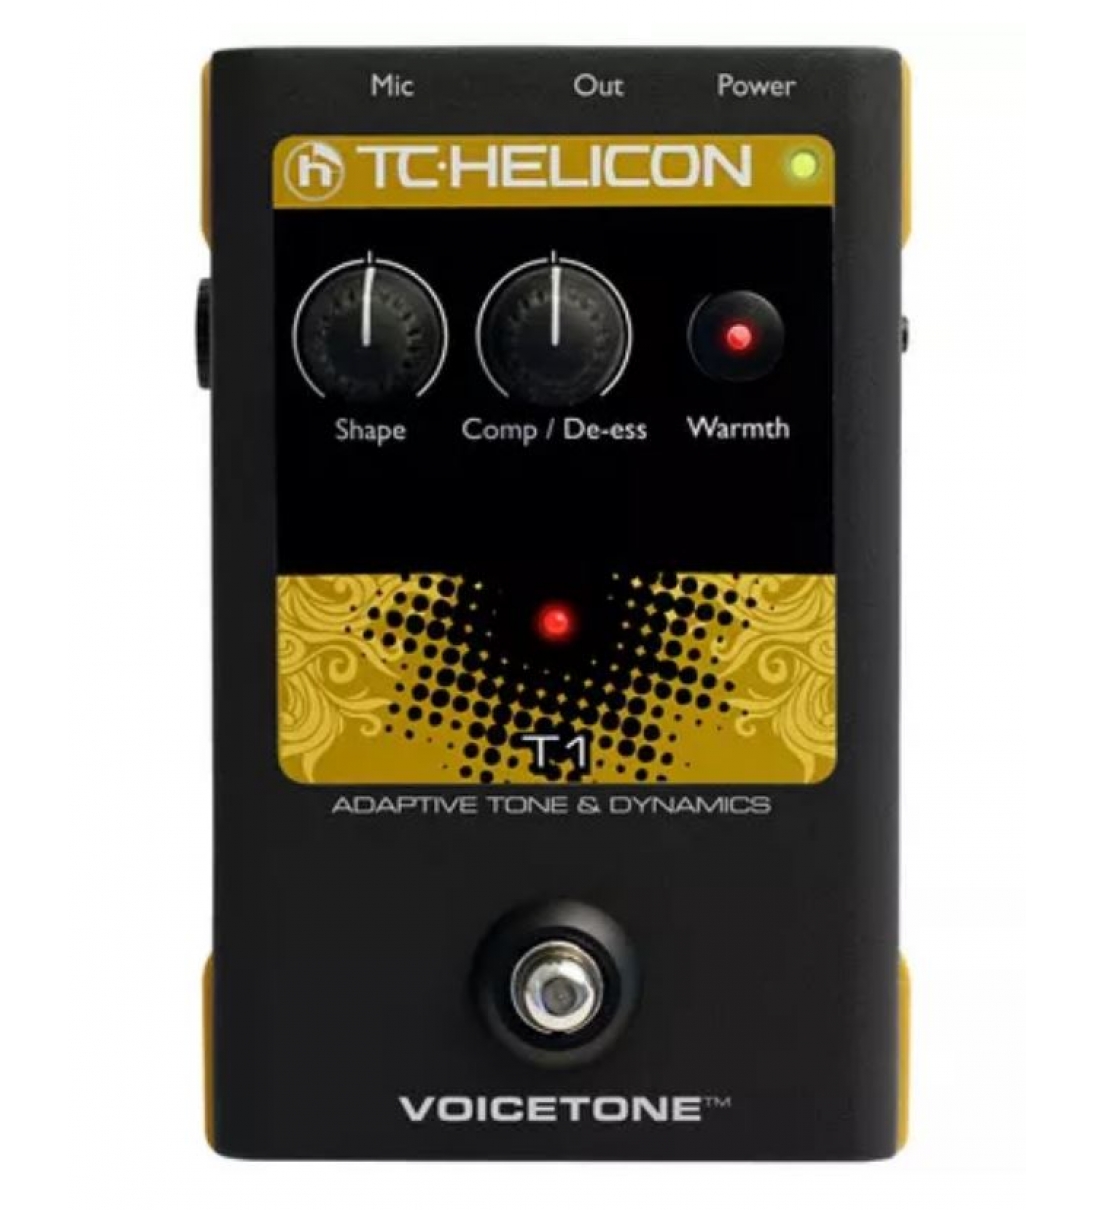 VoiceTone T1 Adaptive Tone & Dynamics